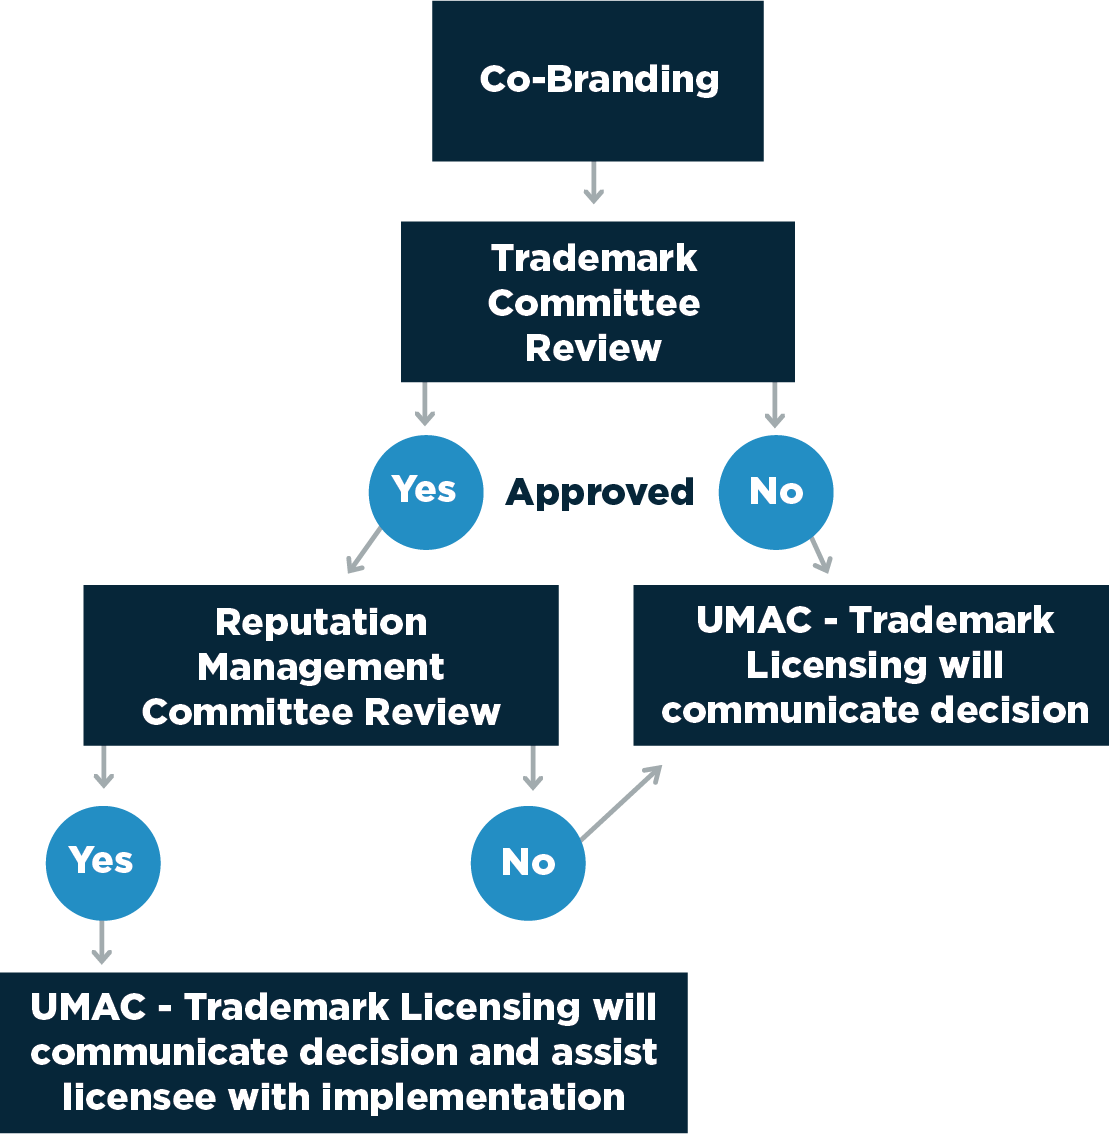 co-branding follow the trademark review process flow chart